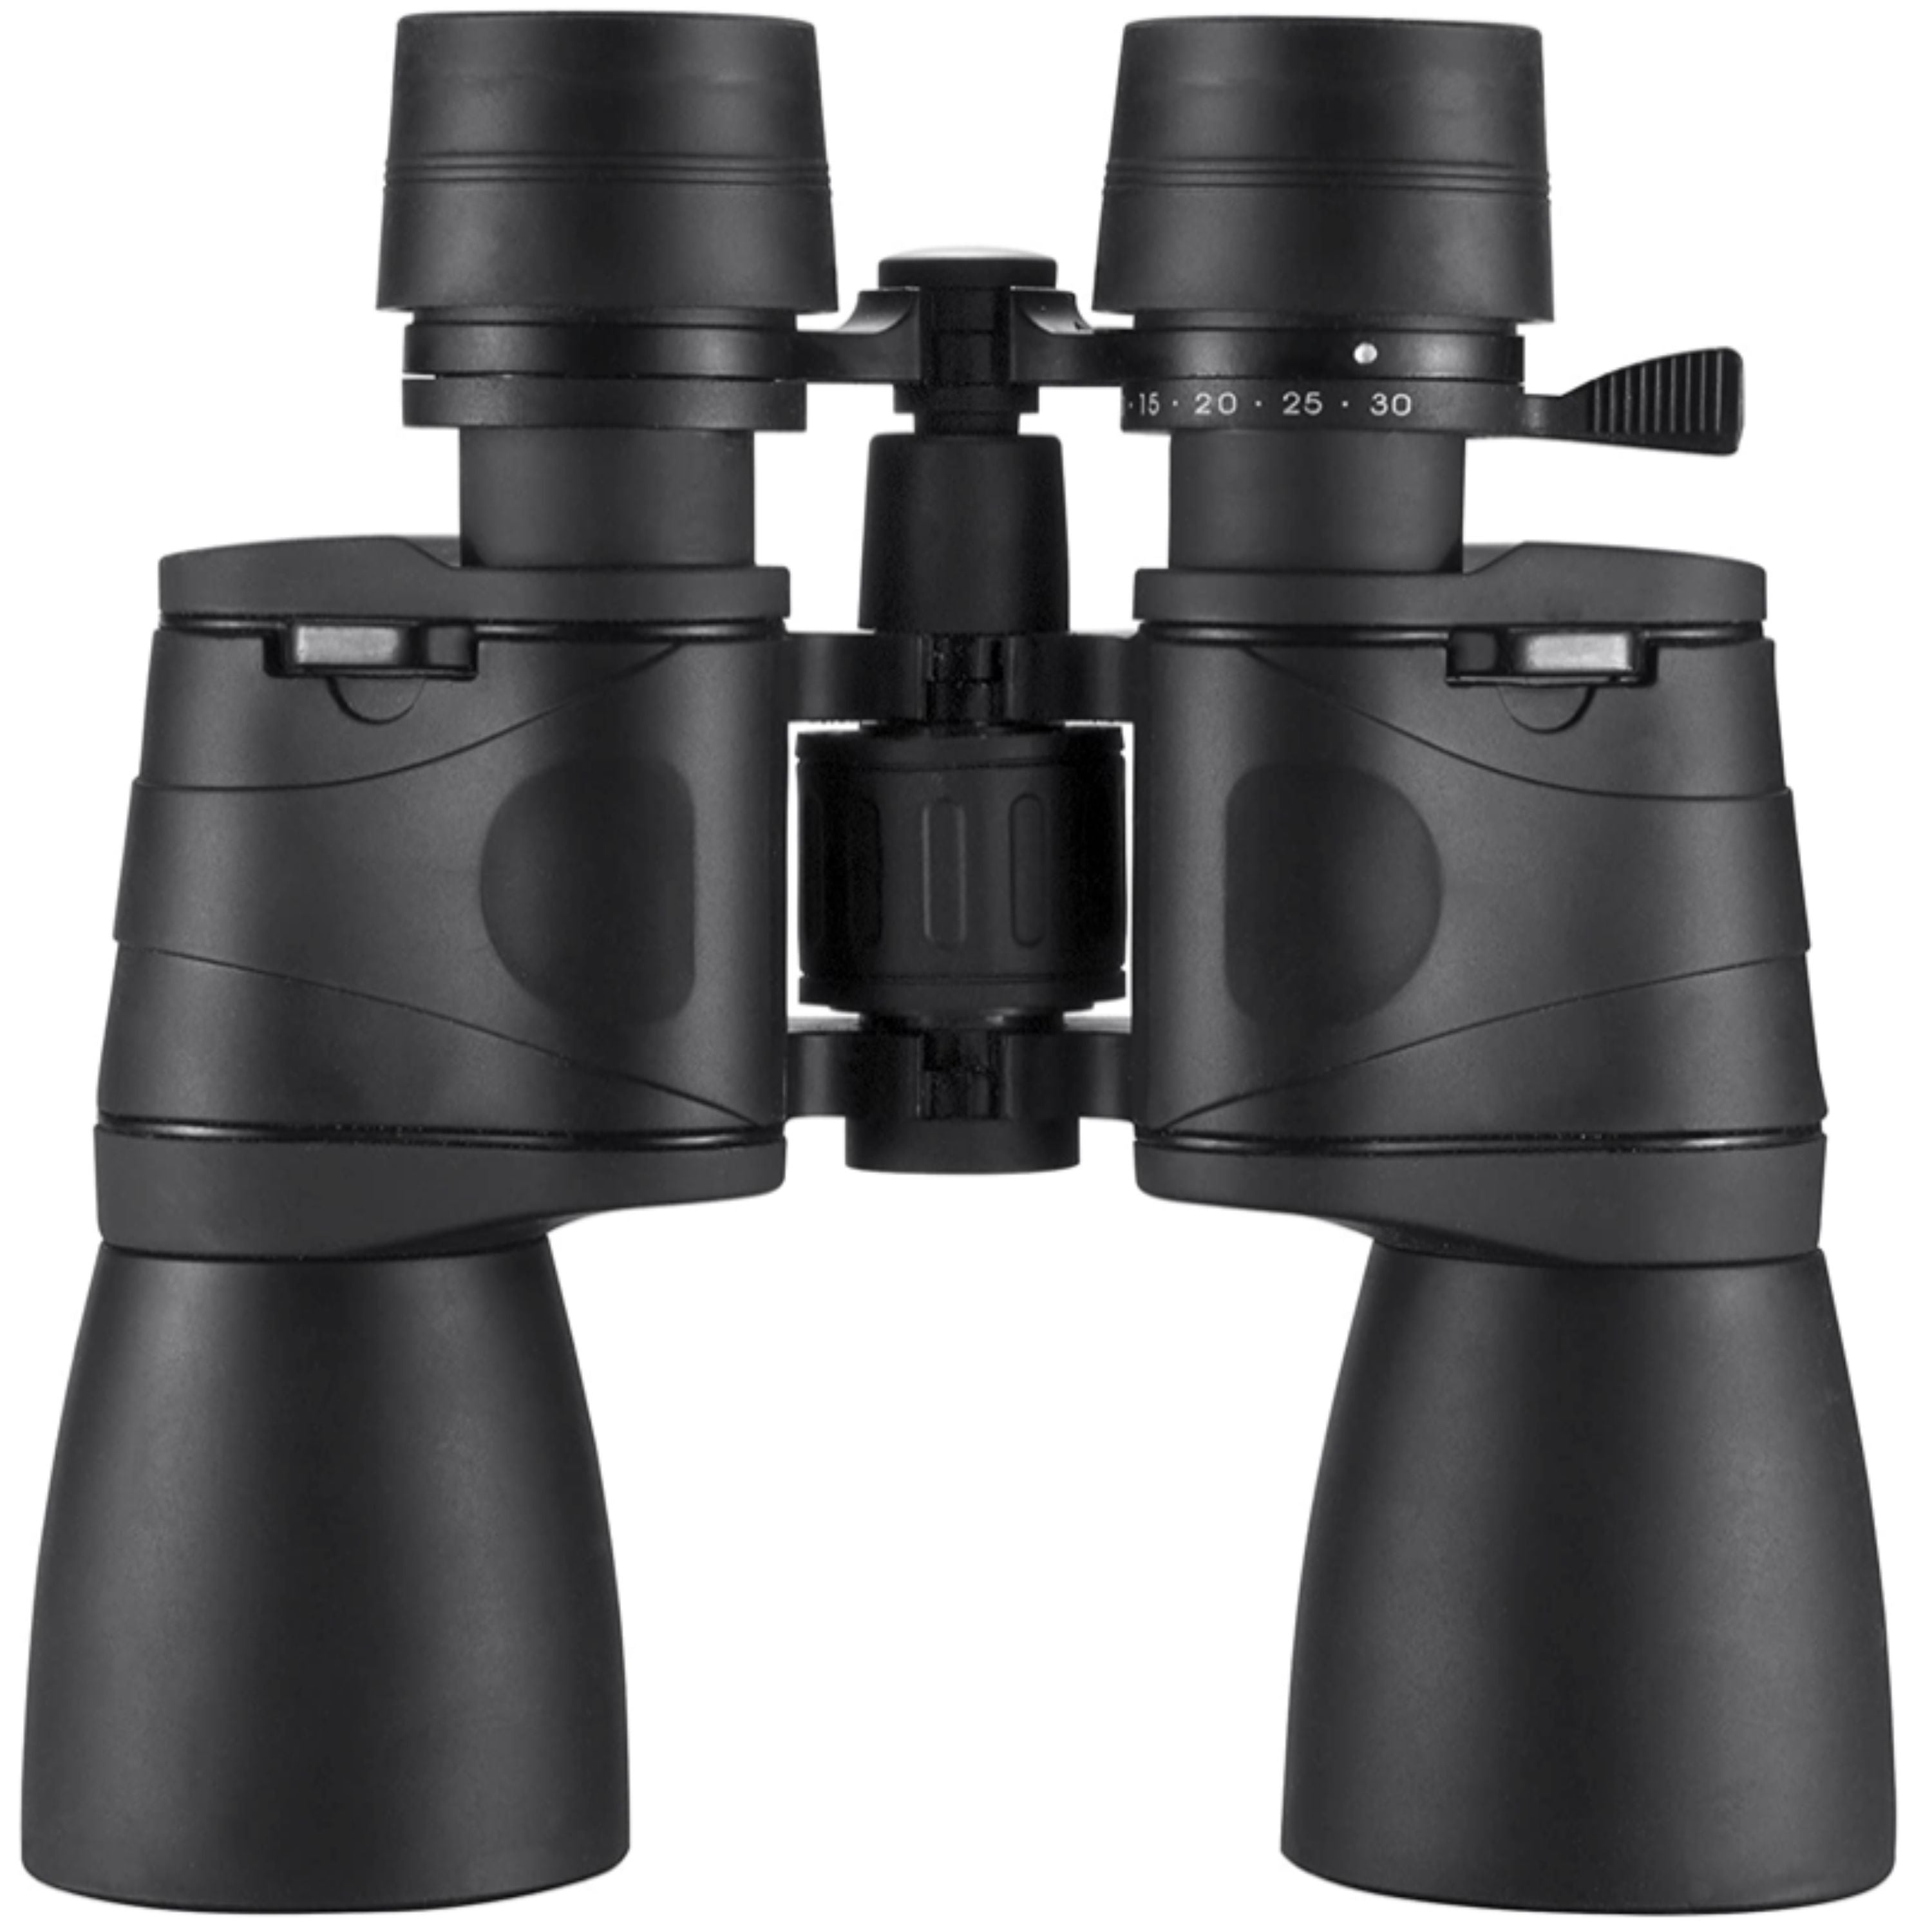 "Gladiator" 10-30x50 mm Binoculars